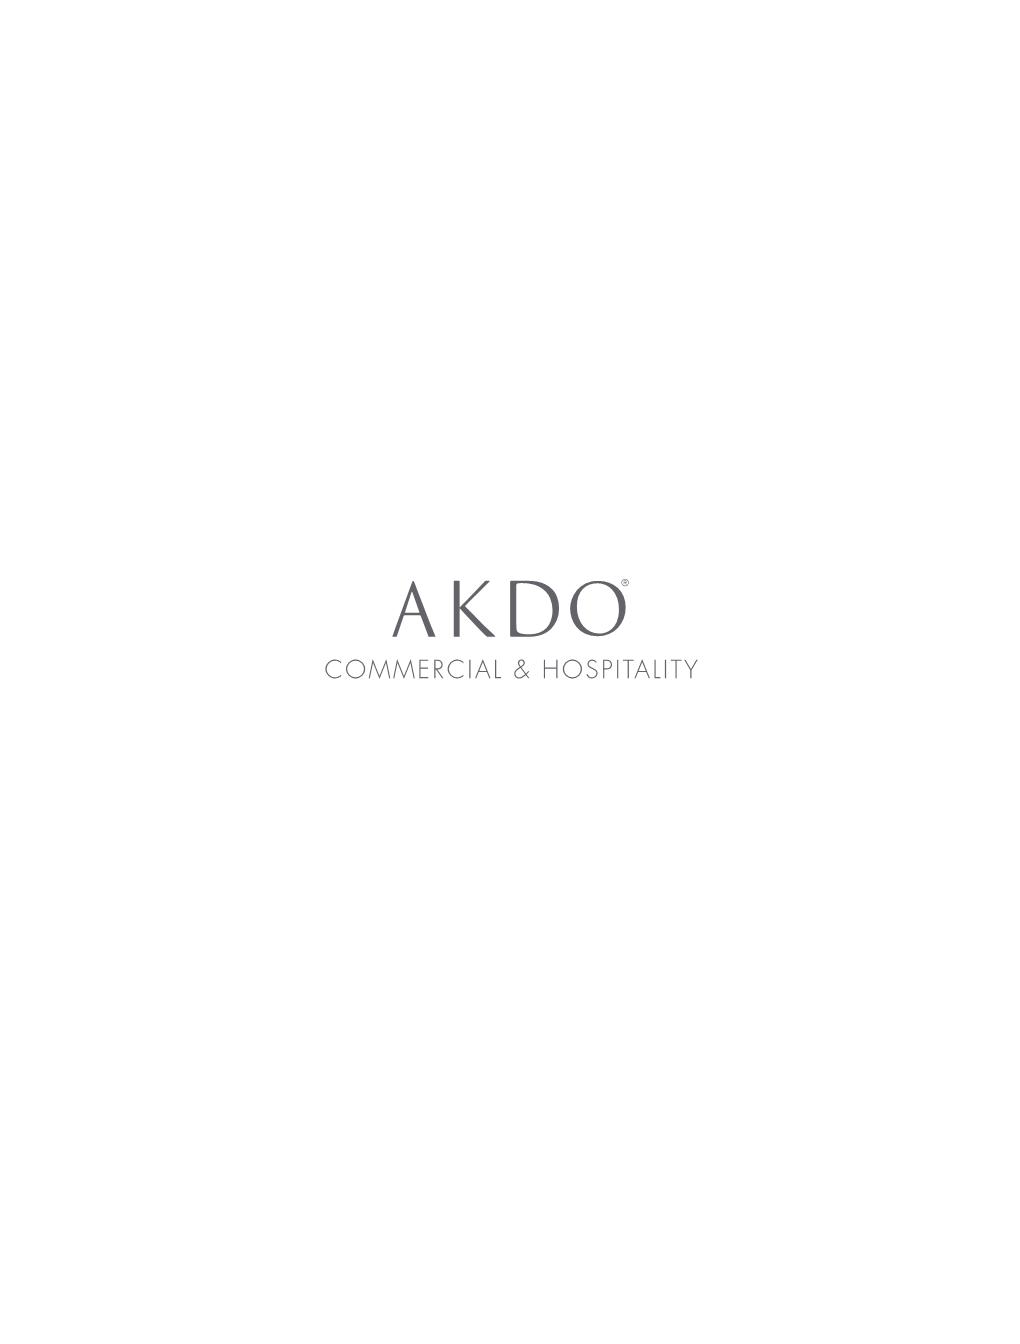 AKDO Commercial & Hospitality